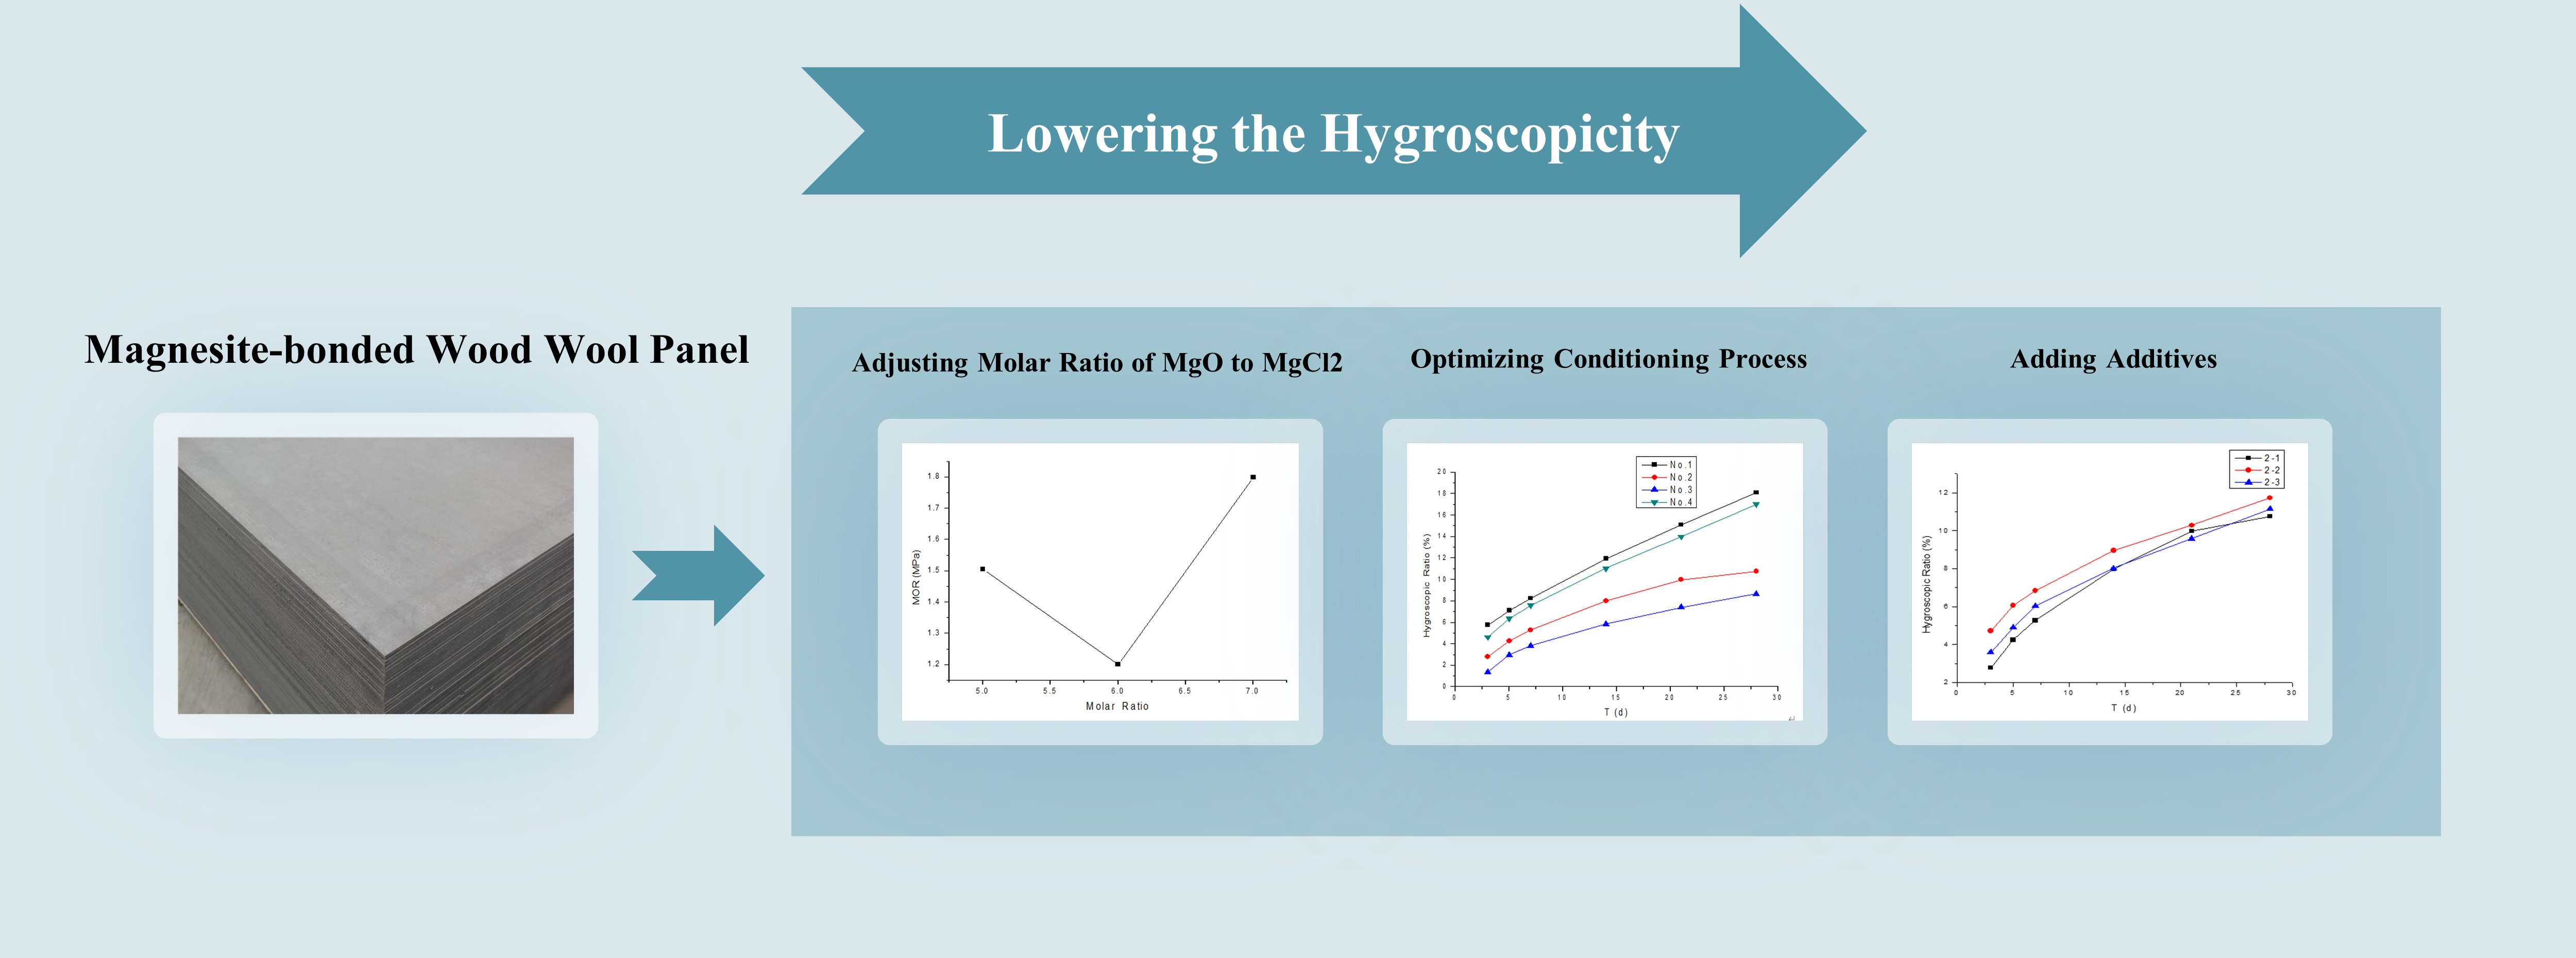 Study on Improvement of Hygroscopicity of Magnesite-Bonded Wood Wool Panel